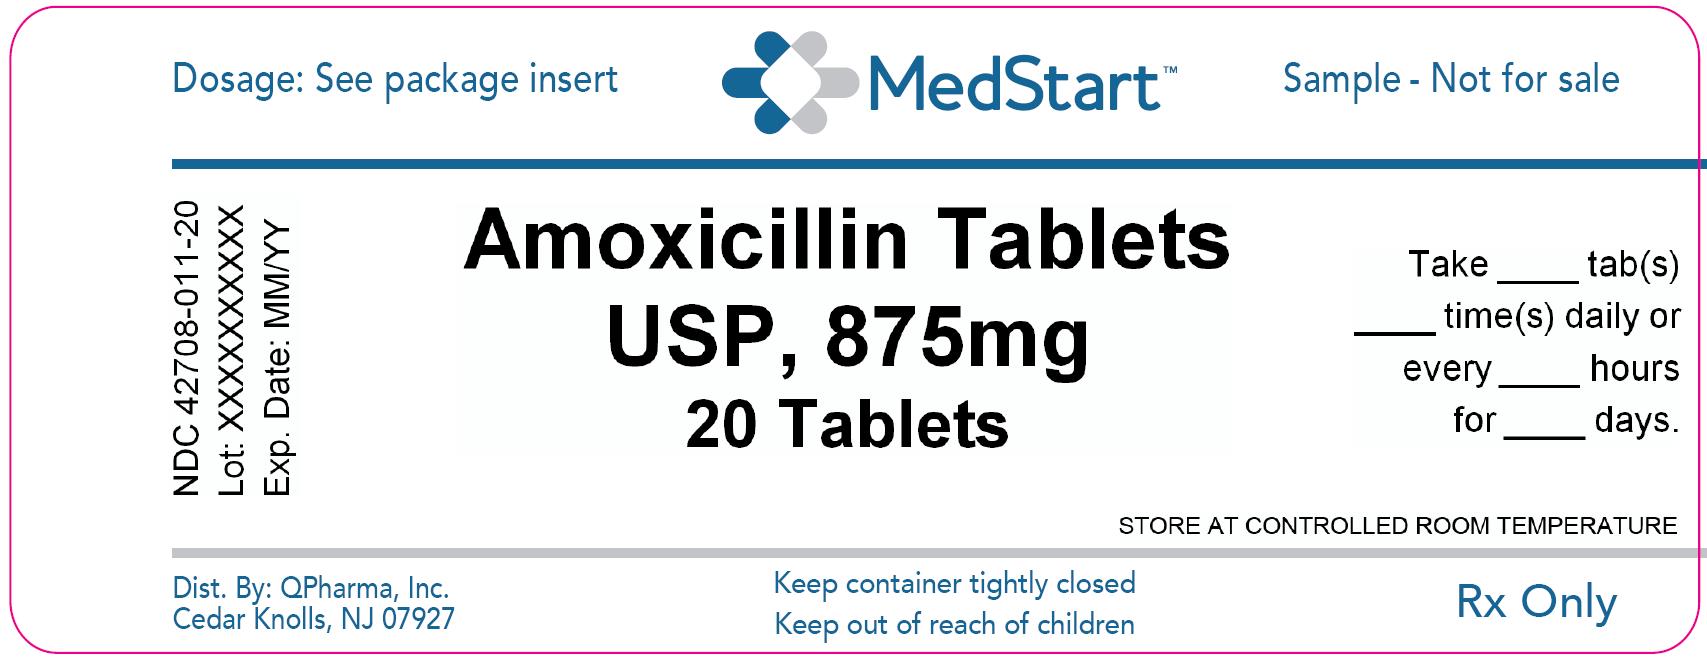 42708-011-20 Amoxicillin Tablets USP 875mg x 20